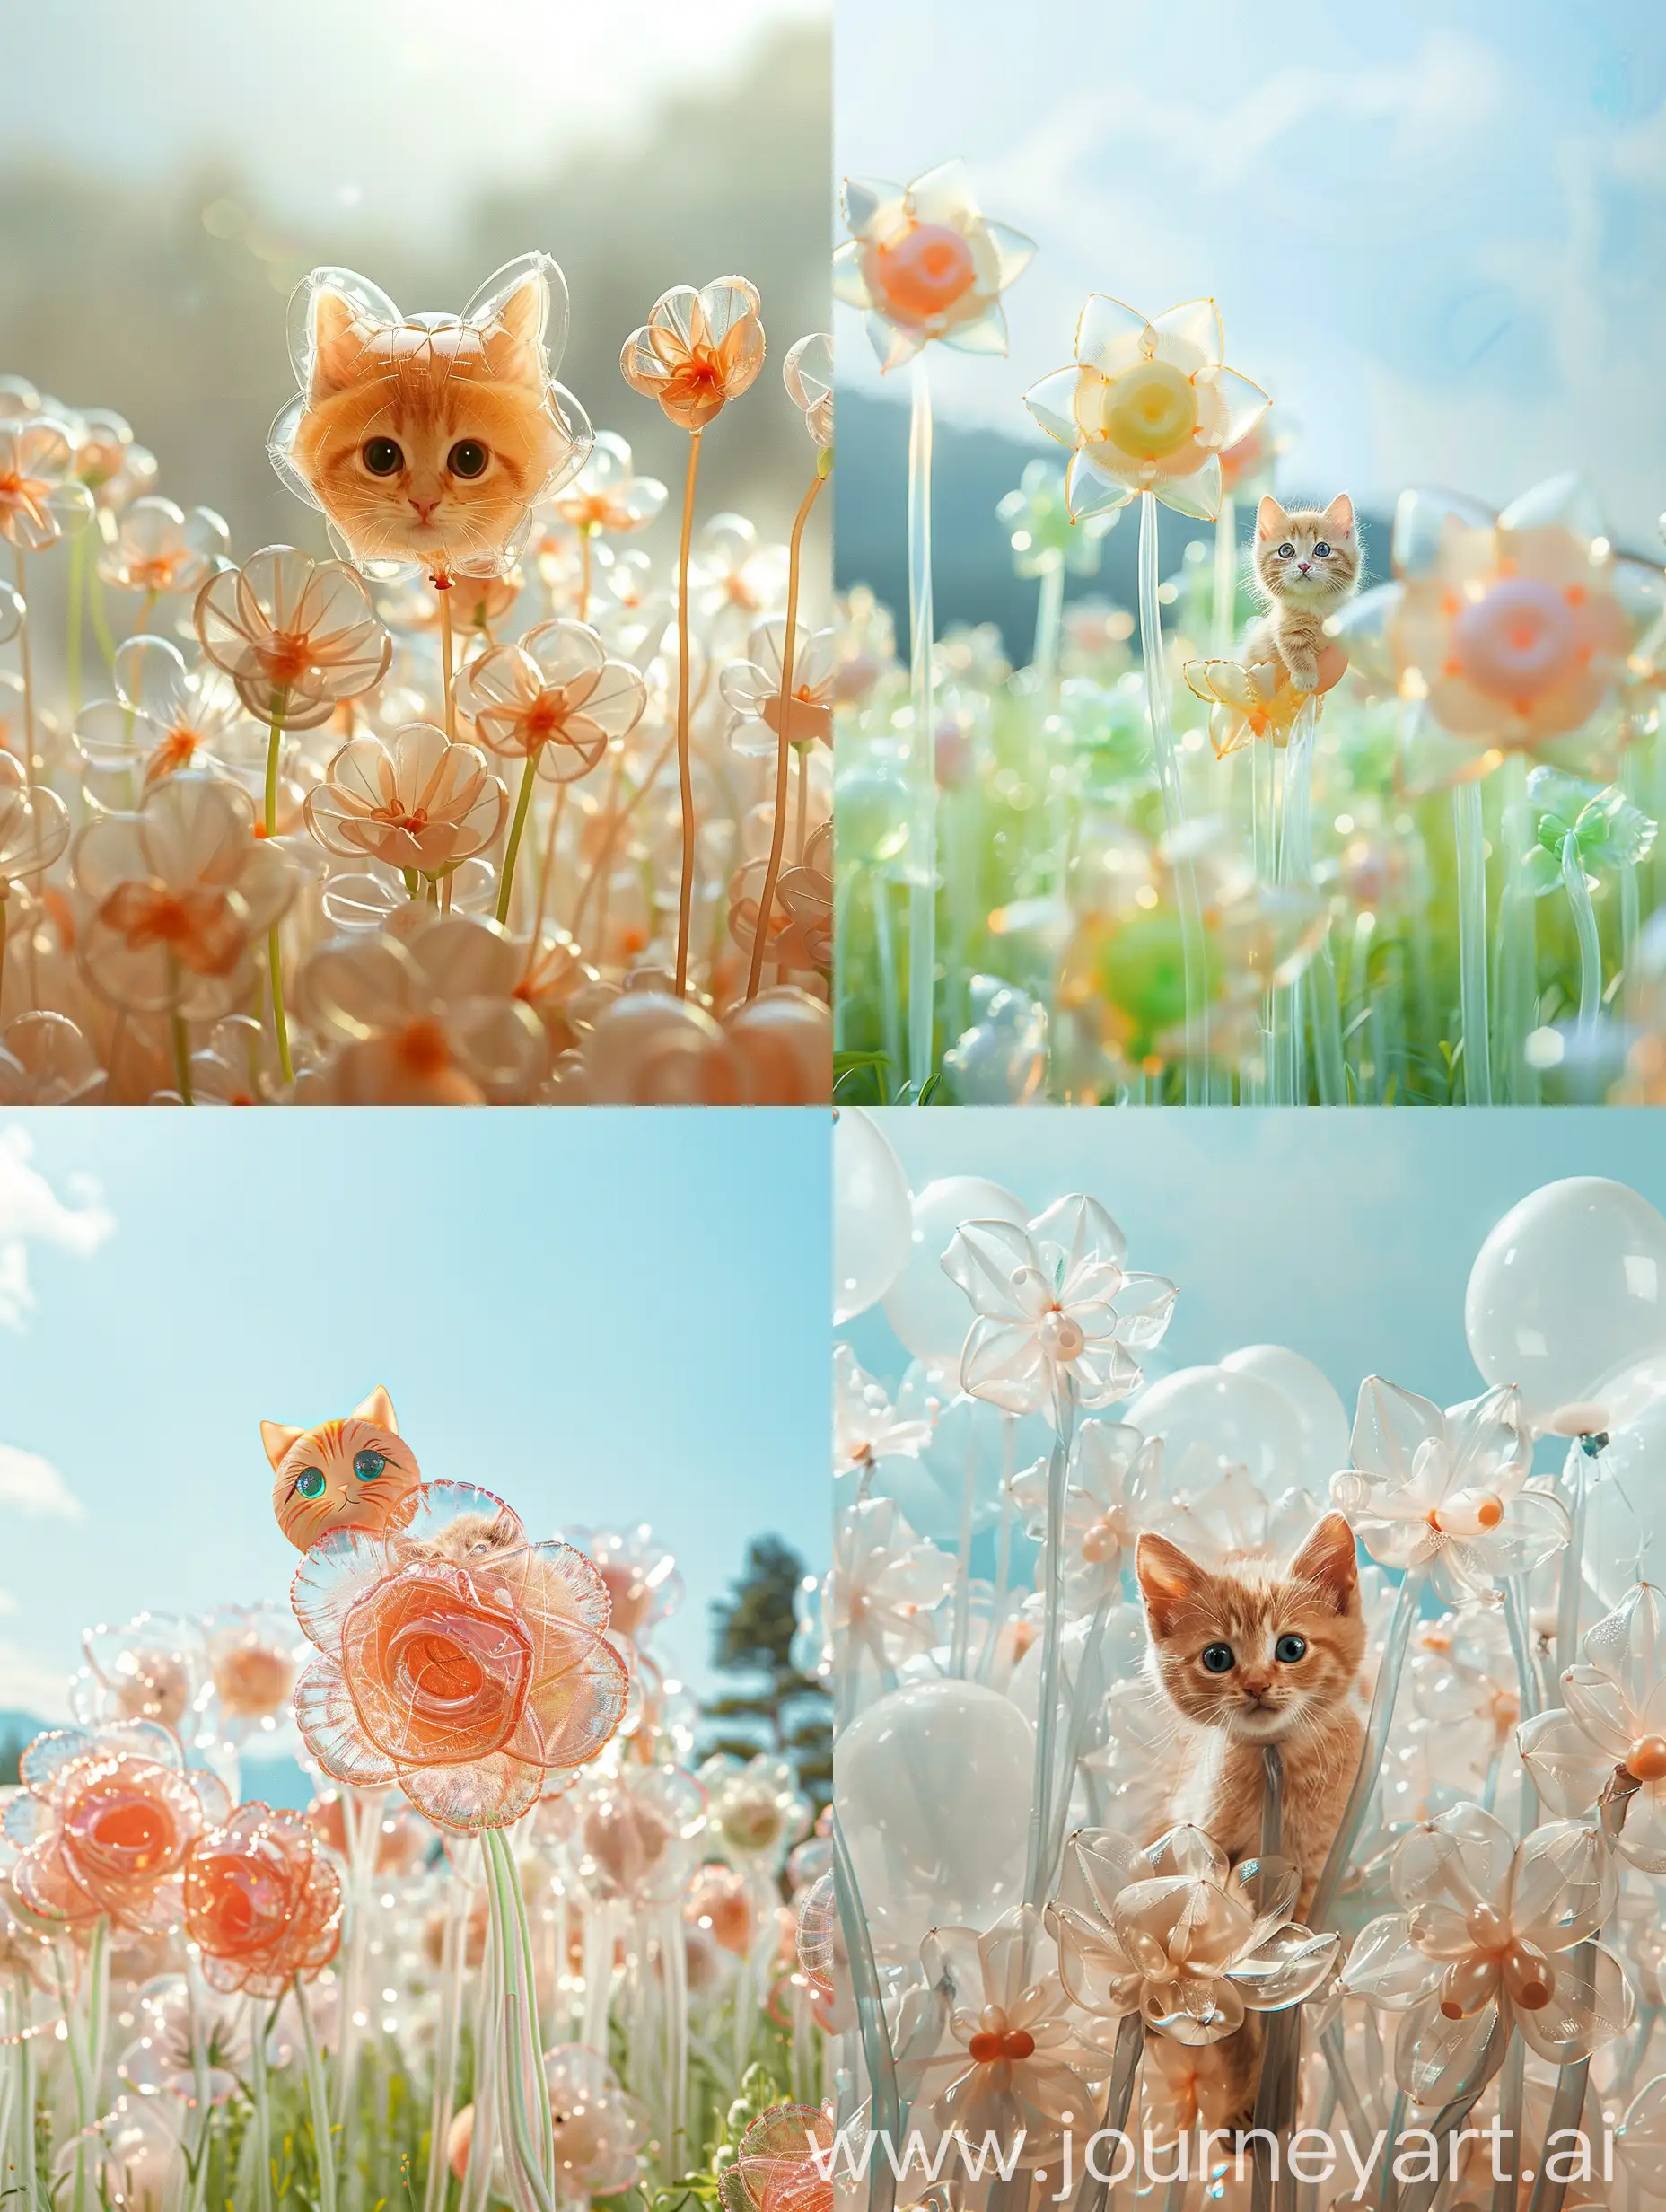 Whimsical-Balloon-Flower-Field-with-Kitten-Heads